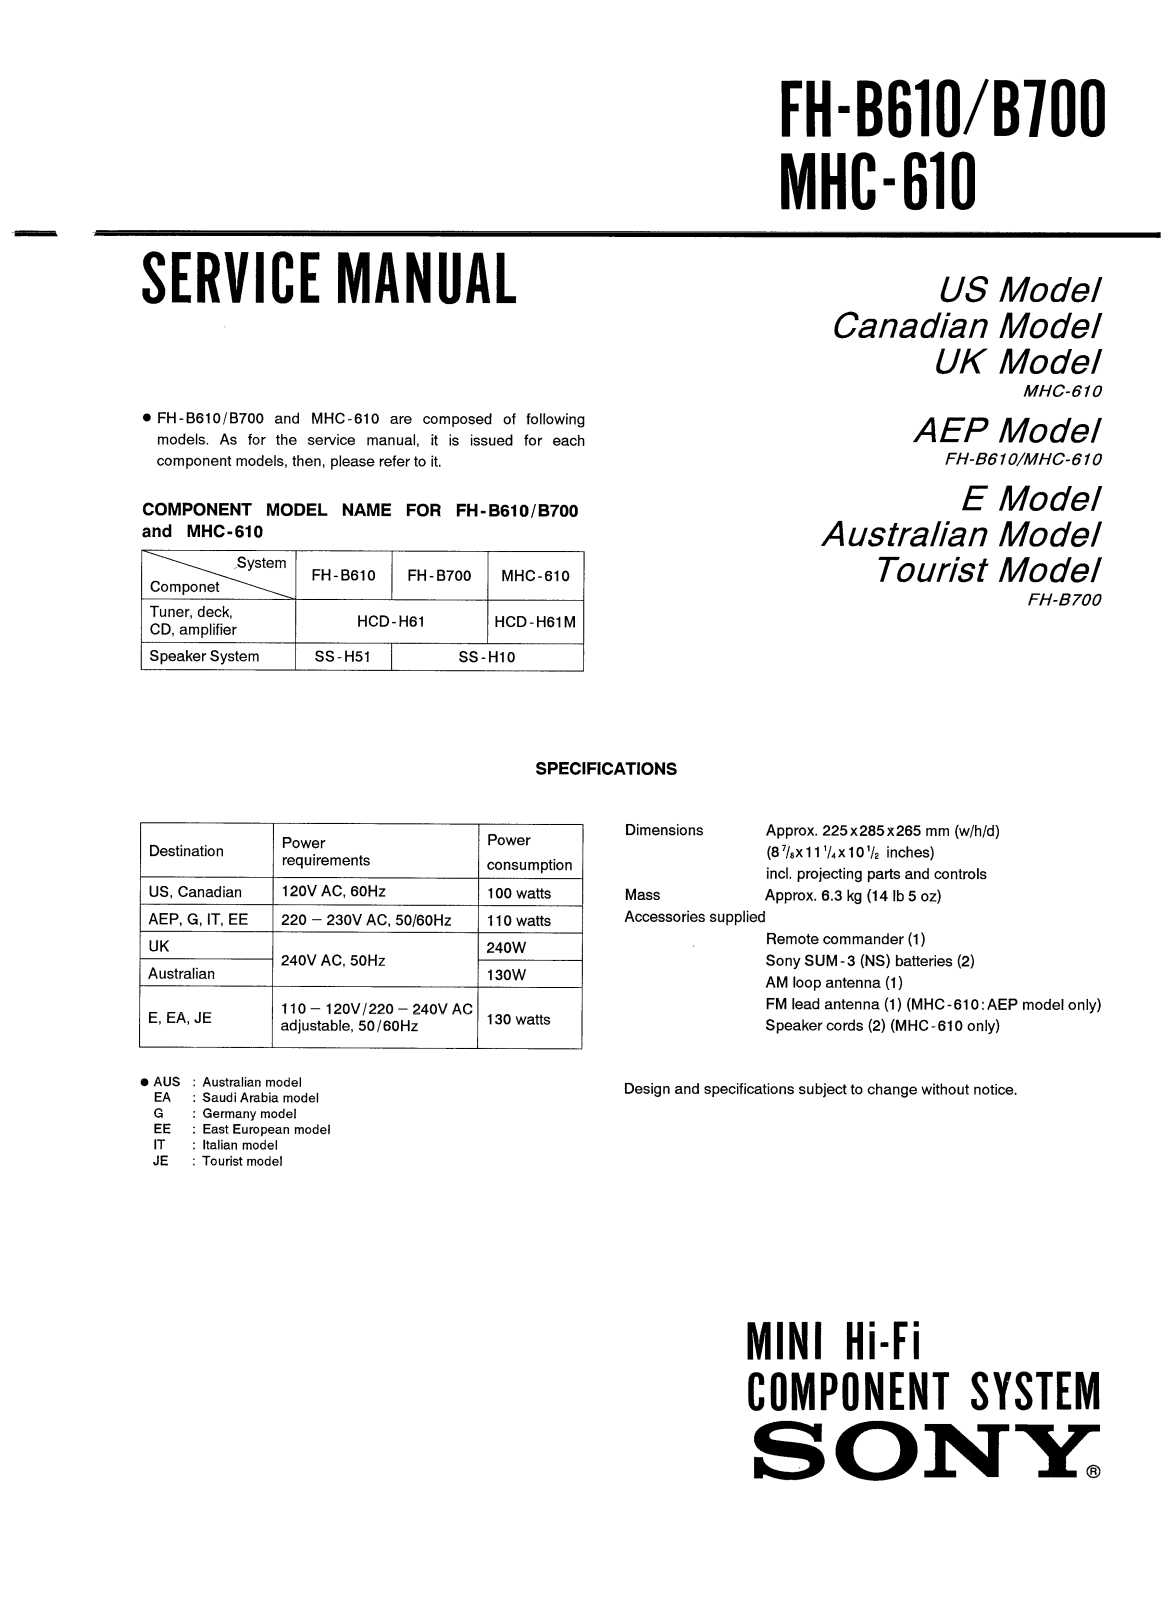 SONY FH-B610, FH-B700, MHC-610 SERVICE MANUAL